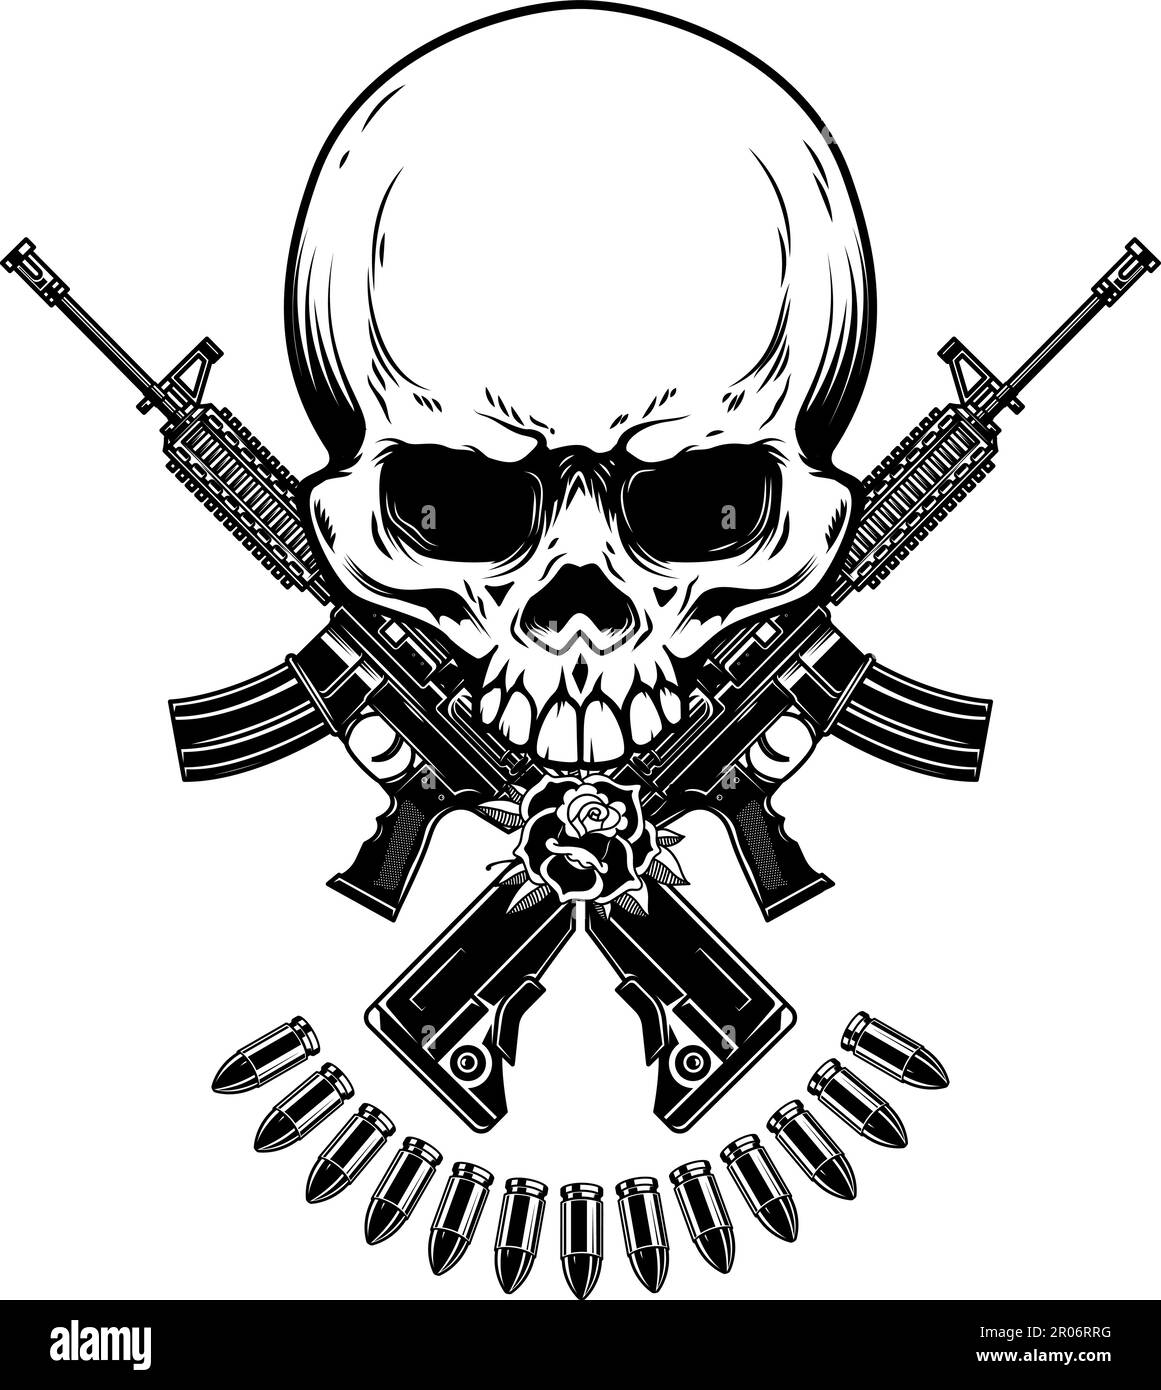 Illustration of the skull with crossed assault rifles. Design element ...